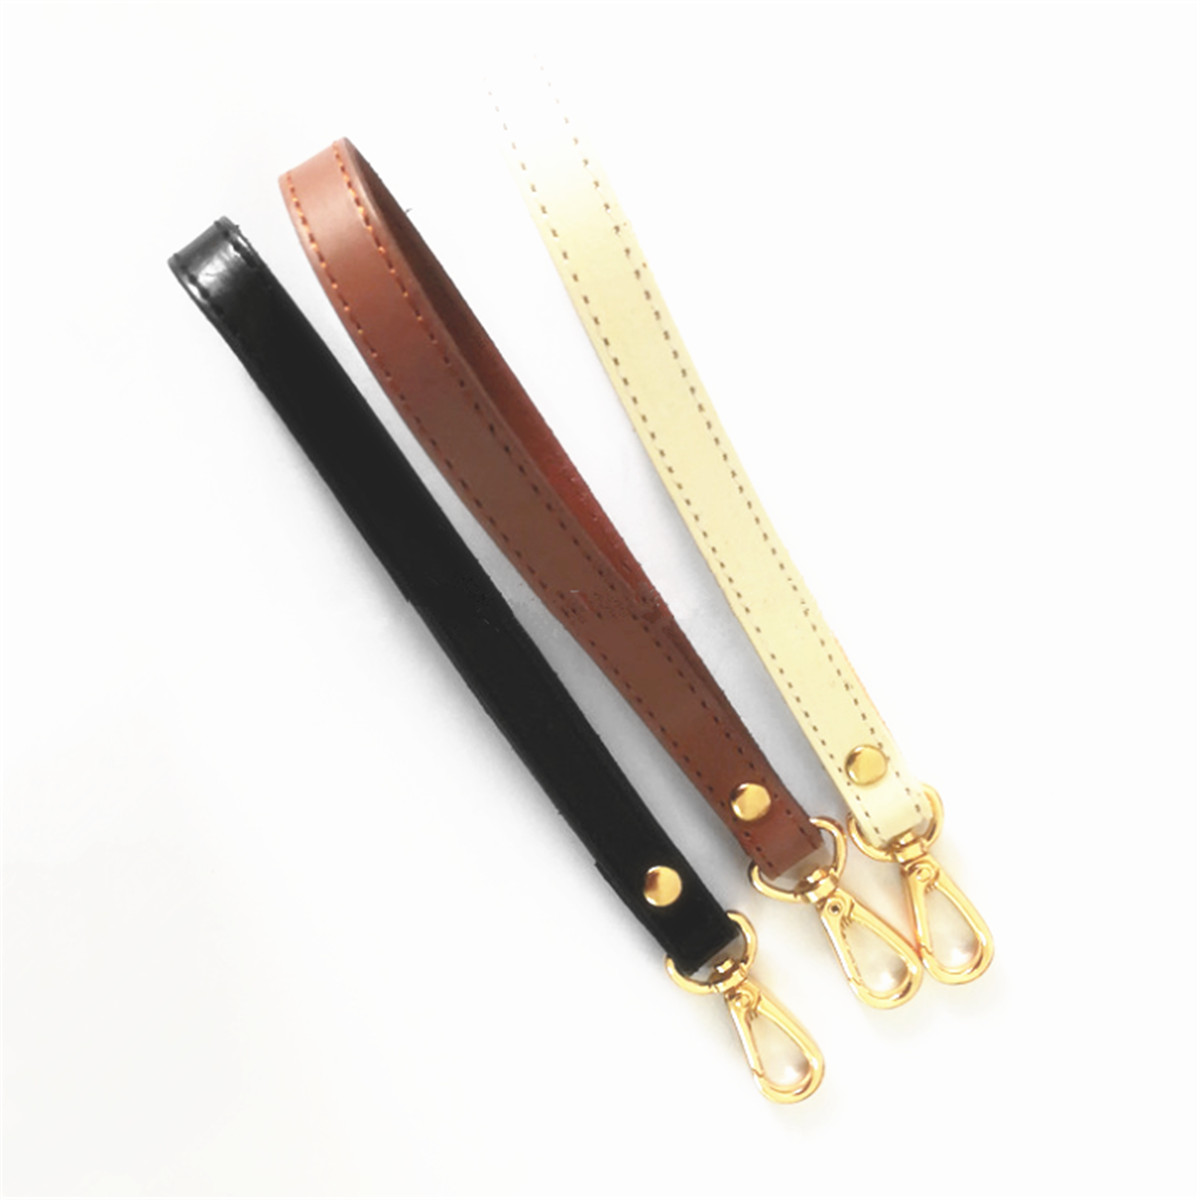 1Pc Leather Buckle Wristlet Wrist Bag Strap Replacement For Clutch Purse Handbag | eBay